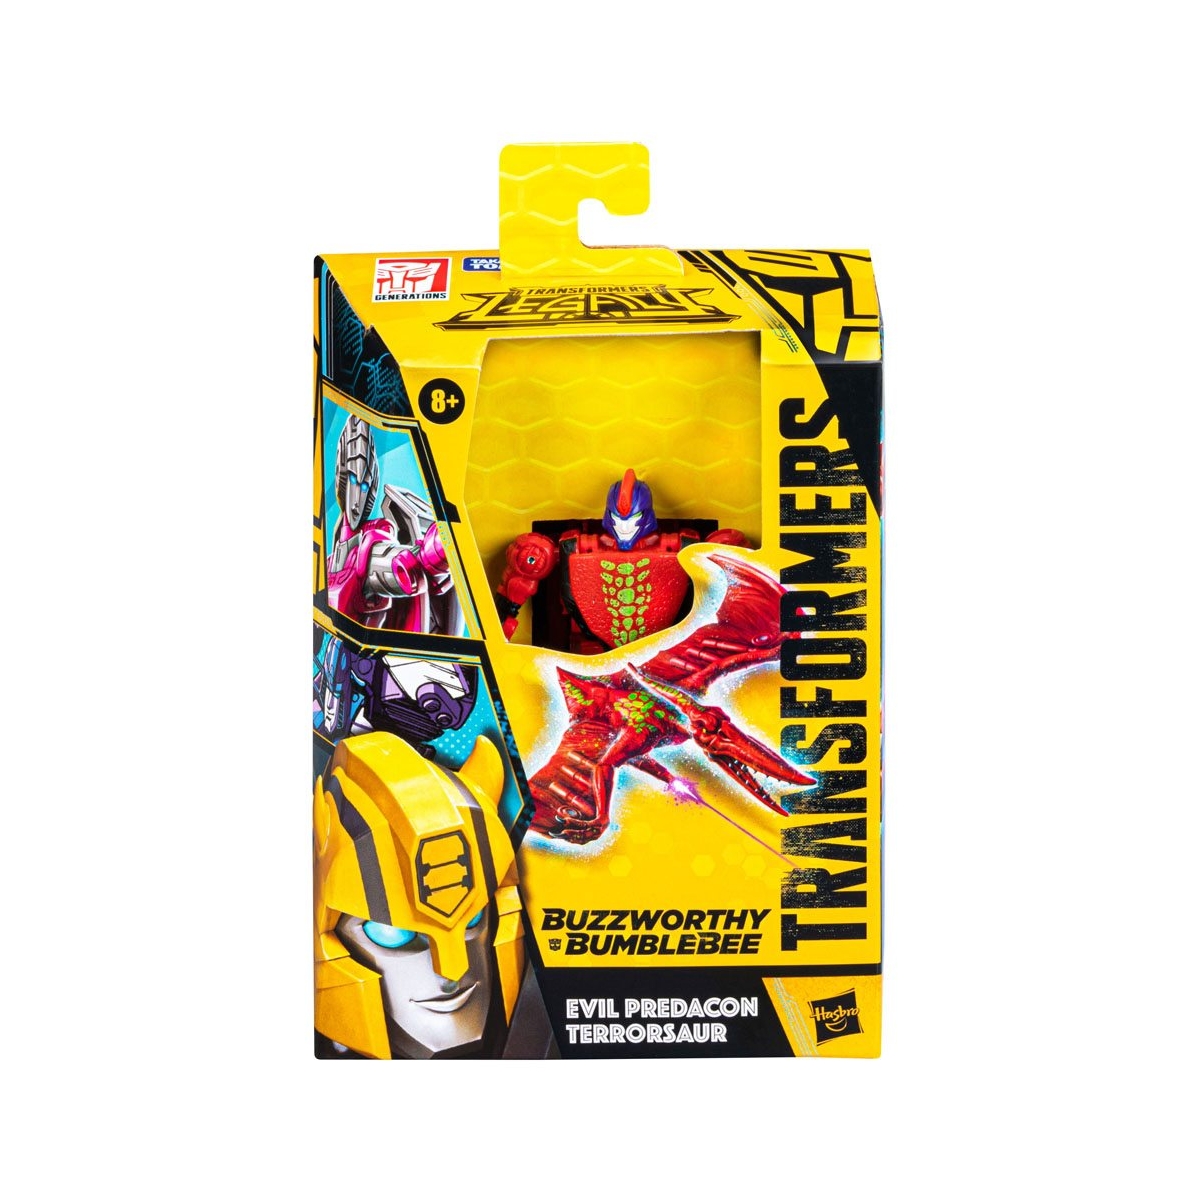 transformers-generation-legacy-buzzworthy-bumblebee-figurine-deluxe-class-2022-evil-predacon-terrorsaur-14-cm